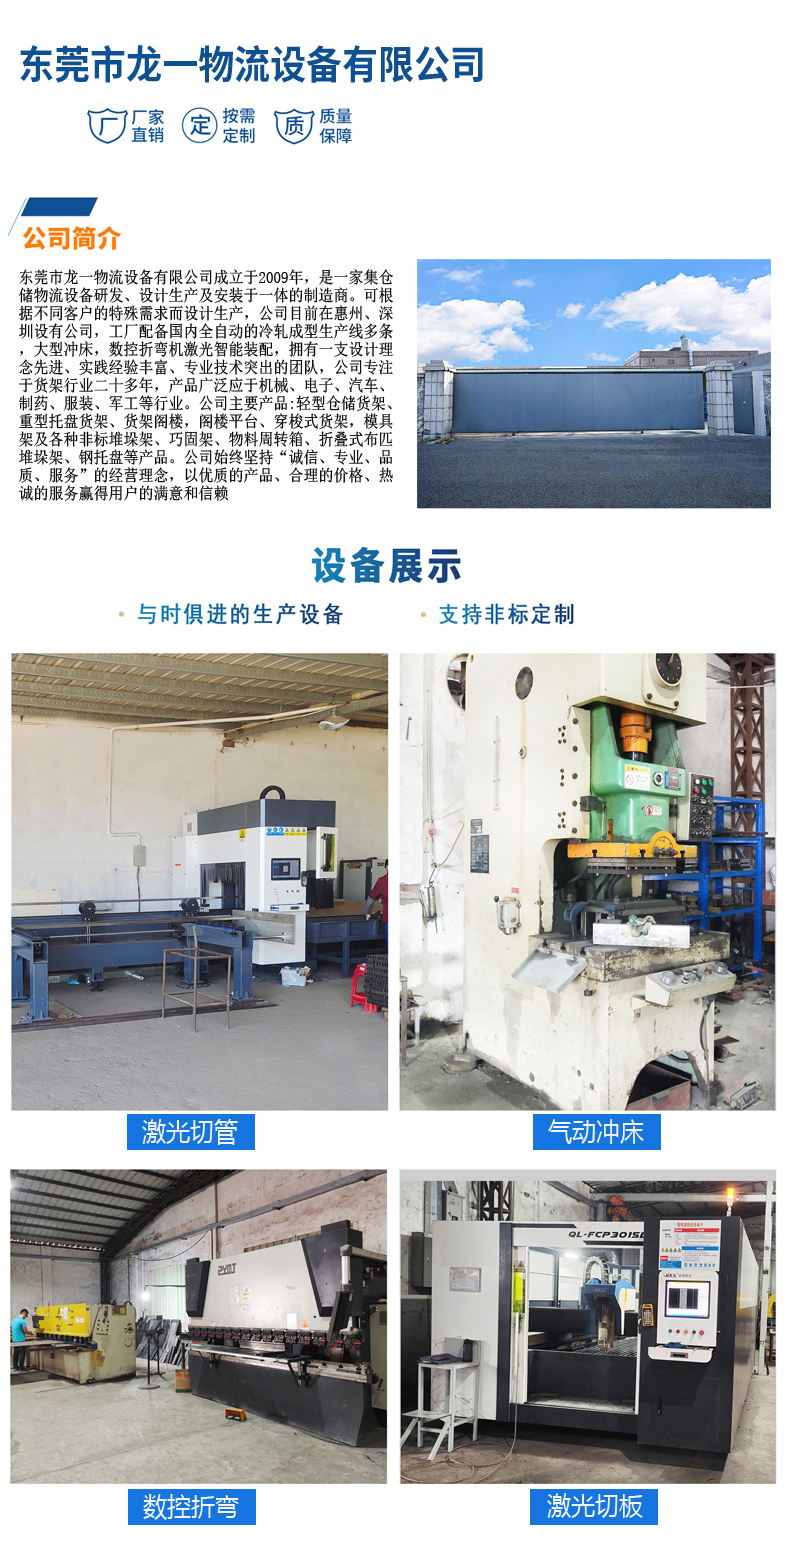 Heavy industrial warehousing shelves, combined shelves, wholesale structure, simple Longyi shelf production